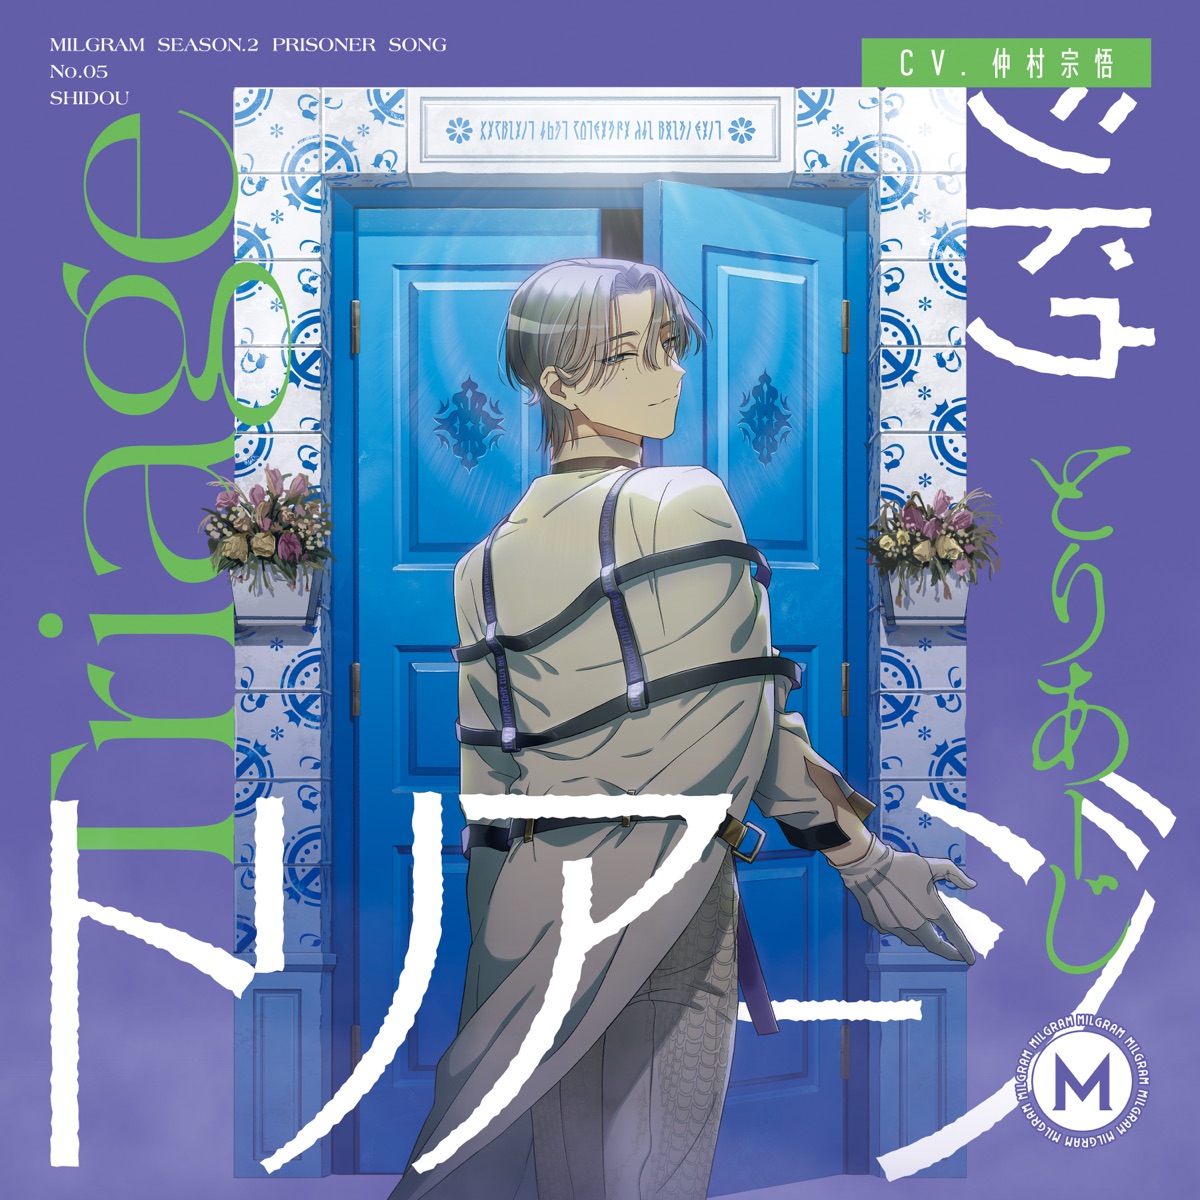 Cover art for『MILGRAM SHIDOU (Shugo Nakamura) - Triage』from the release『Triage』